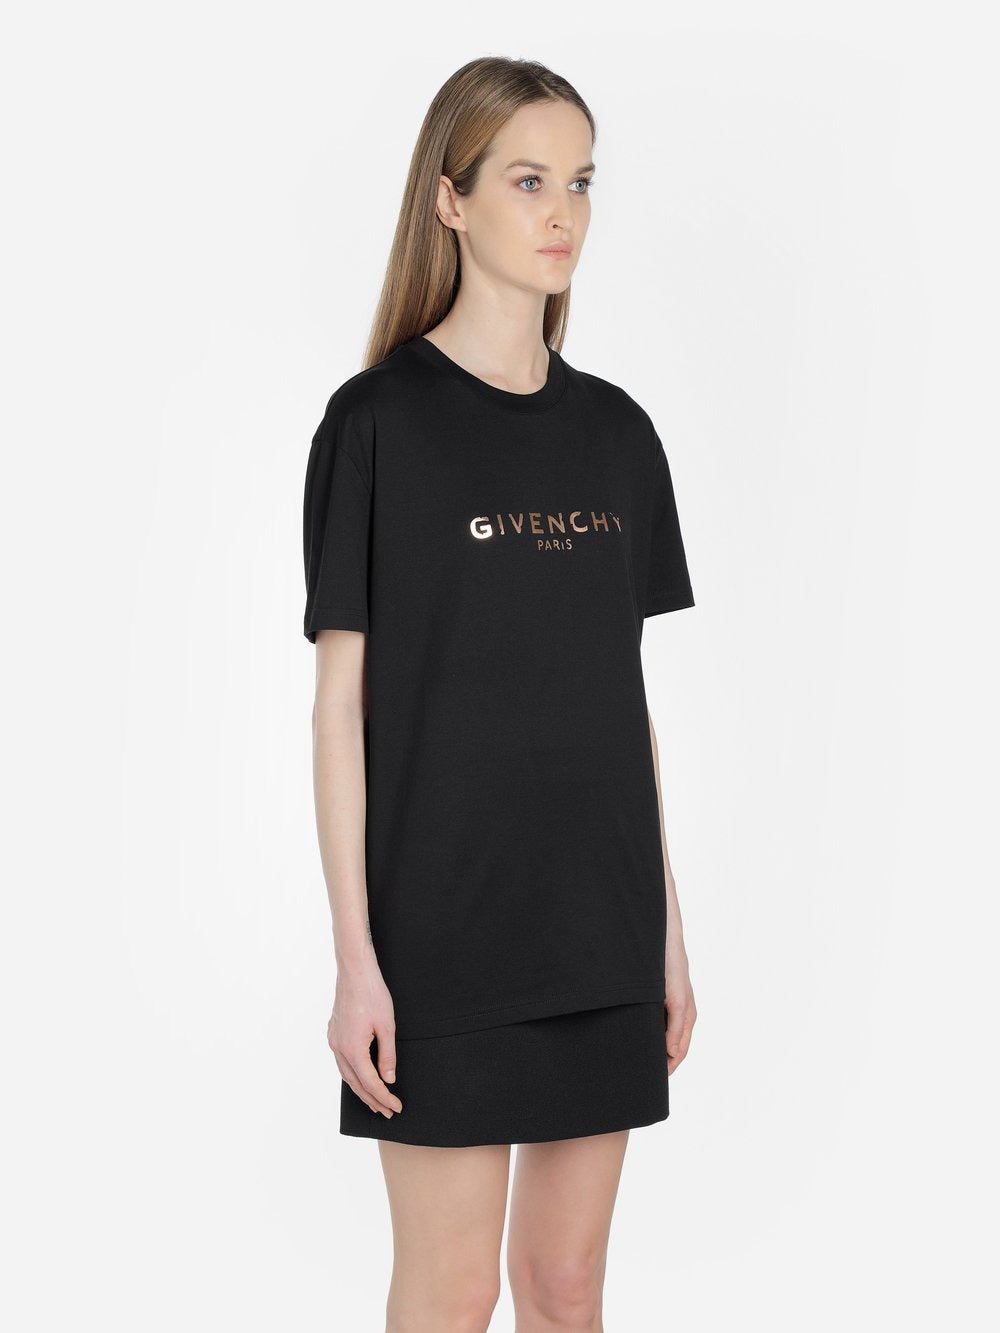 Givenchy women's black vintage logo t-shirt